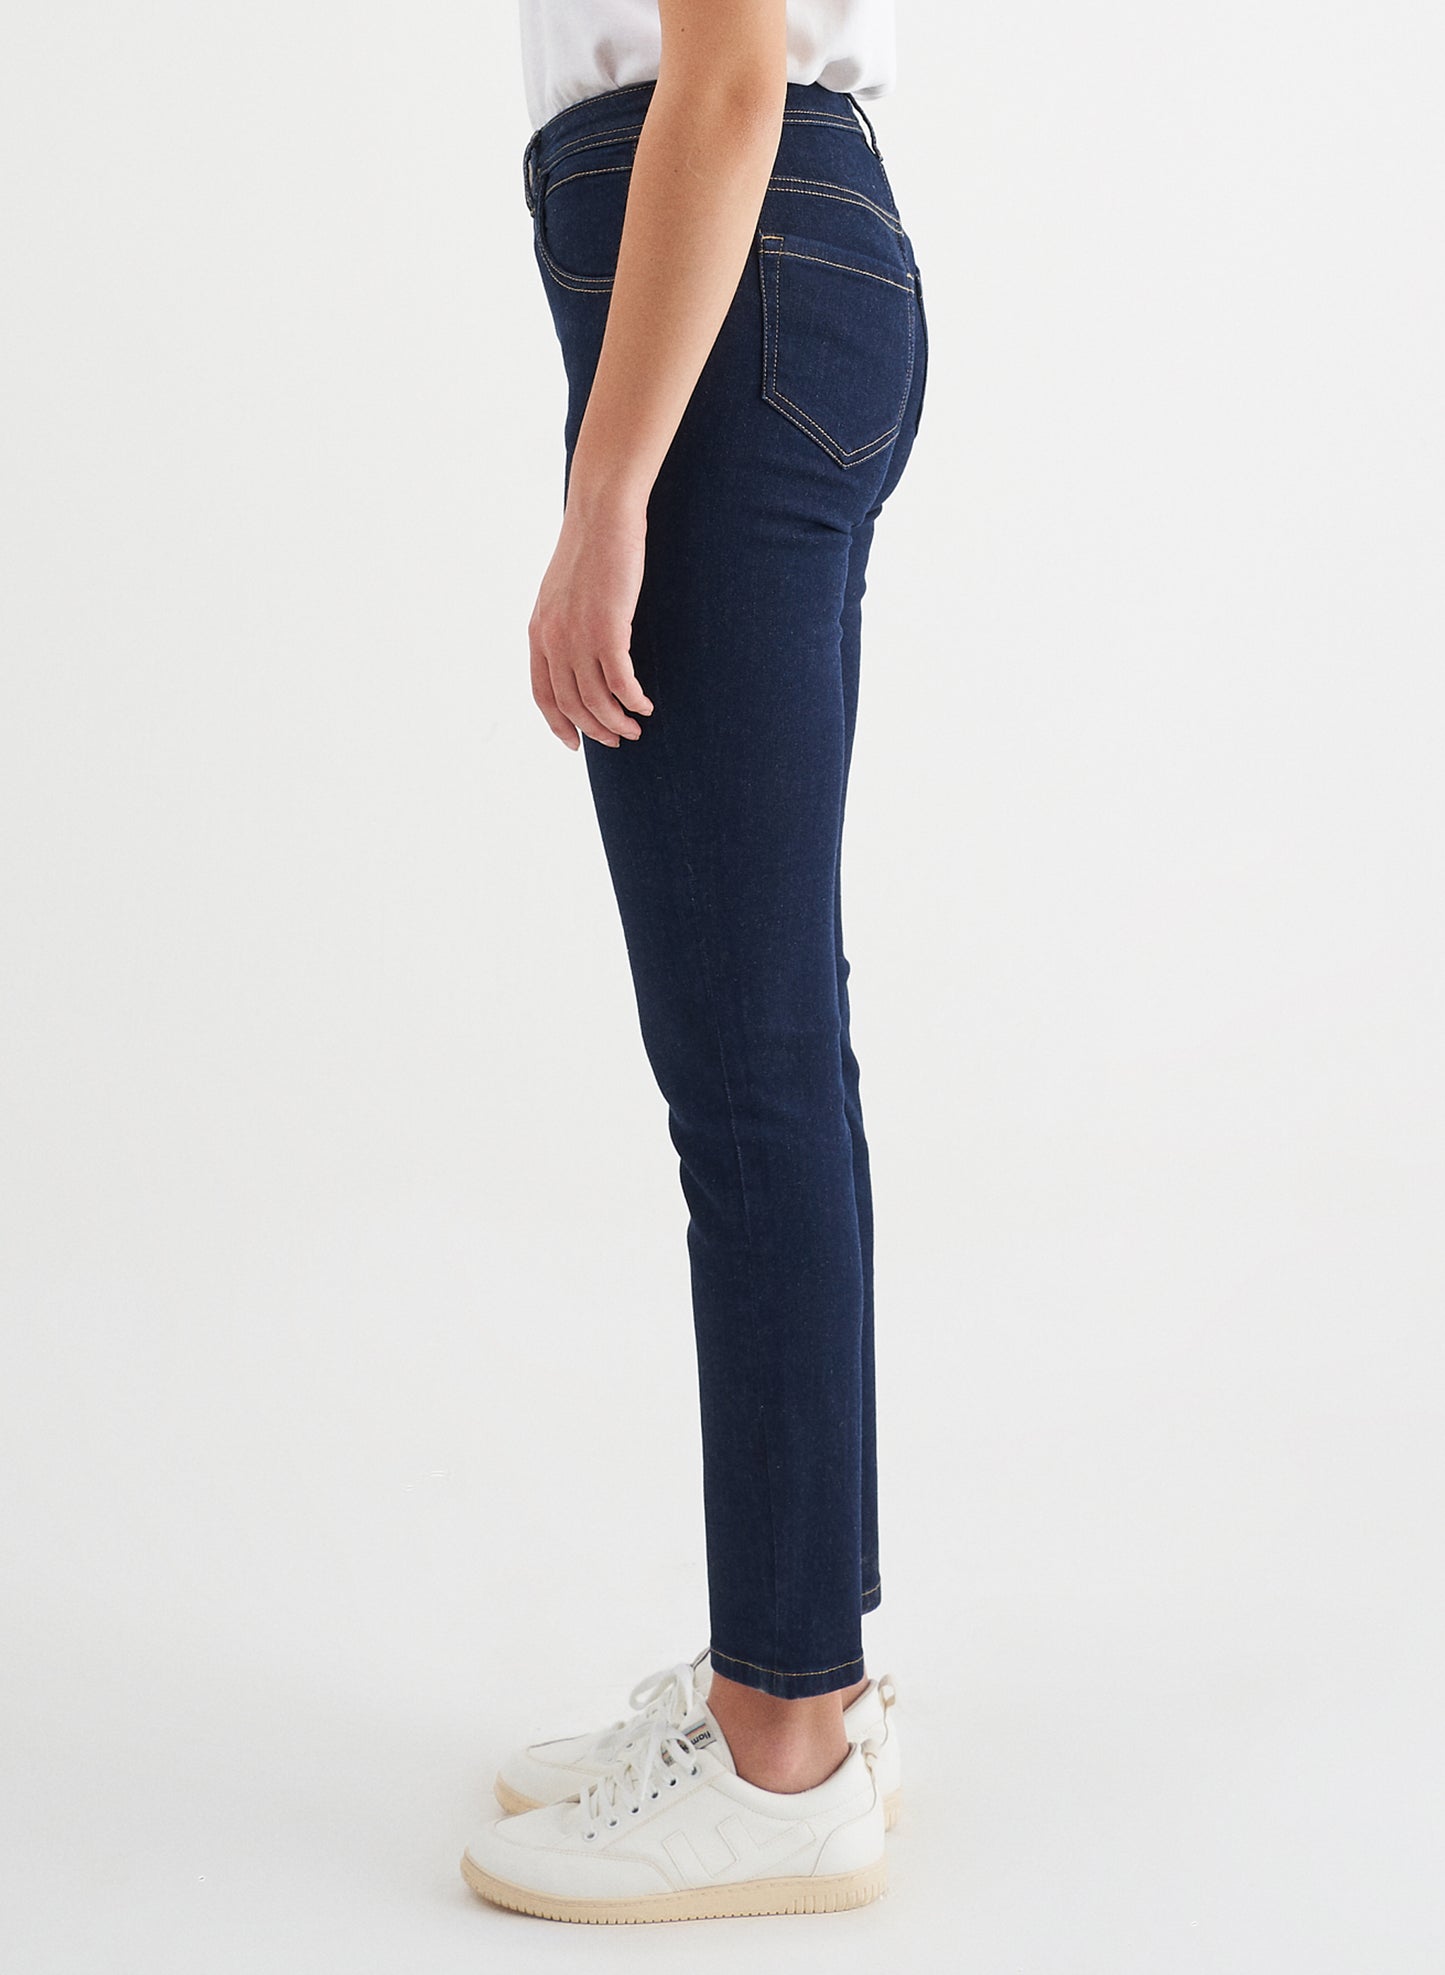 HANNA - Regular Fit Denim Jeans Pant - Dark Blue